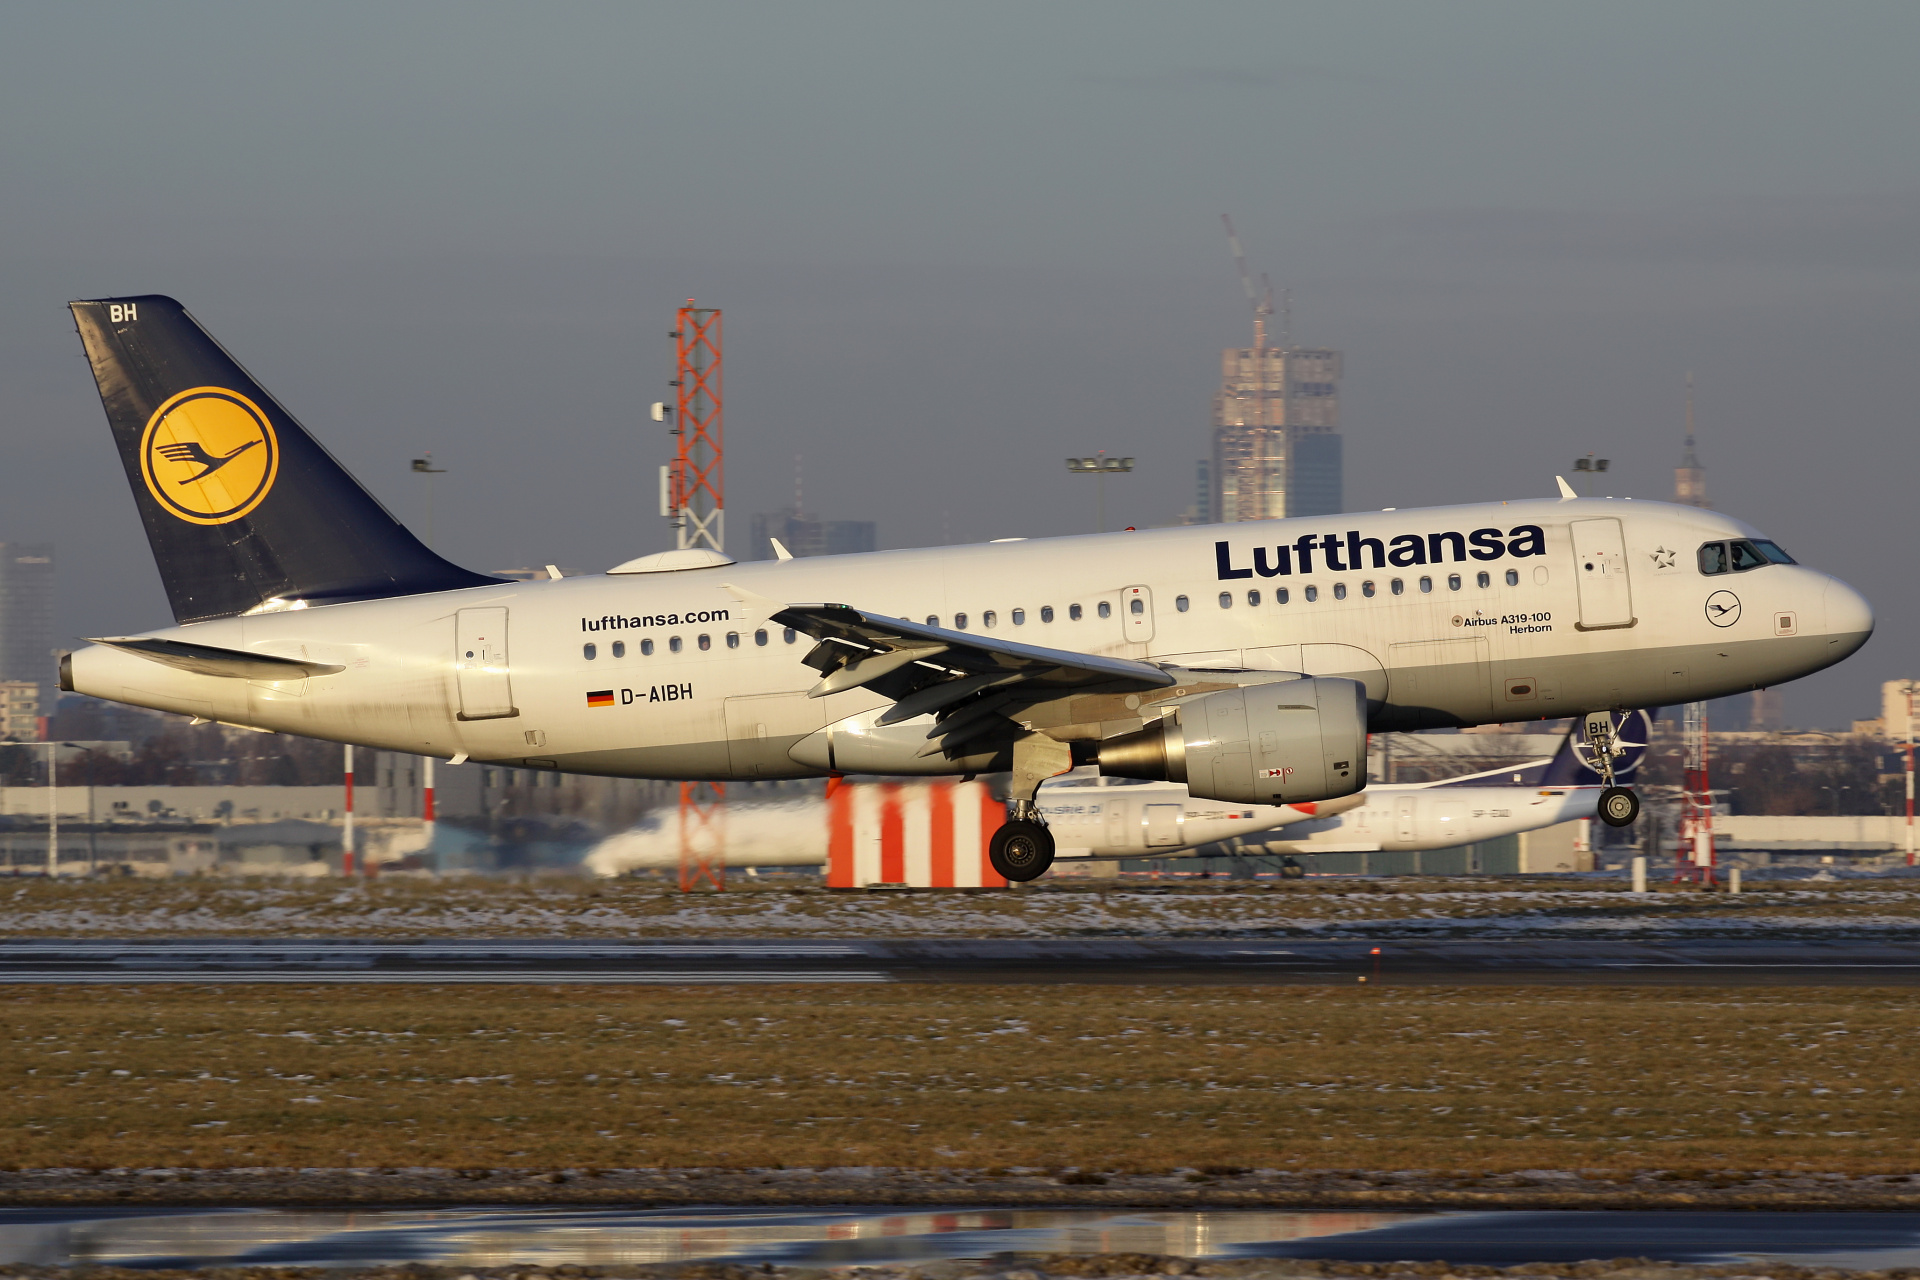 D-AIBH (Aircraft » EPWA Spotting » Airbus A319-100 » Lufthansa)